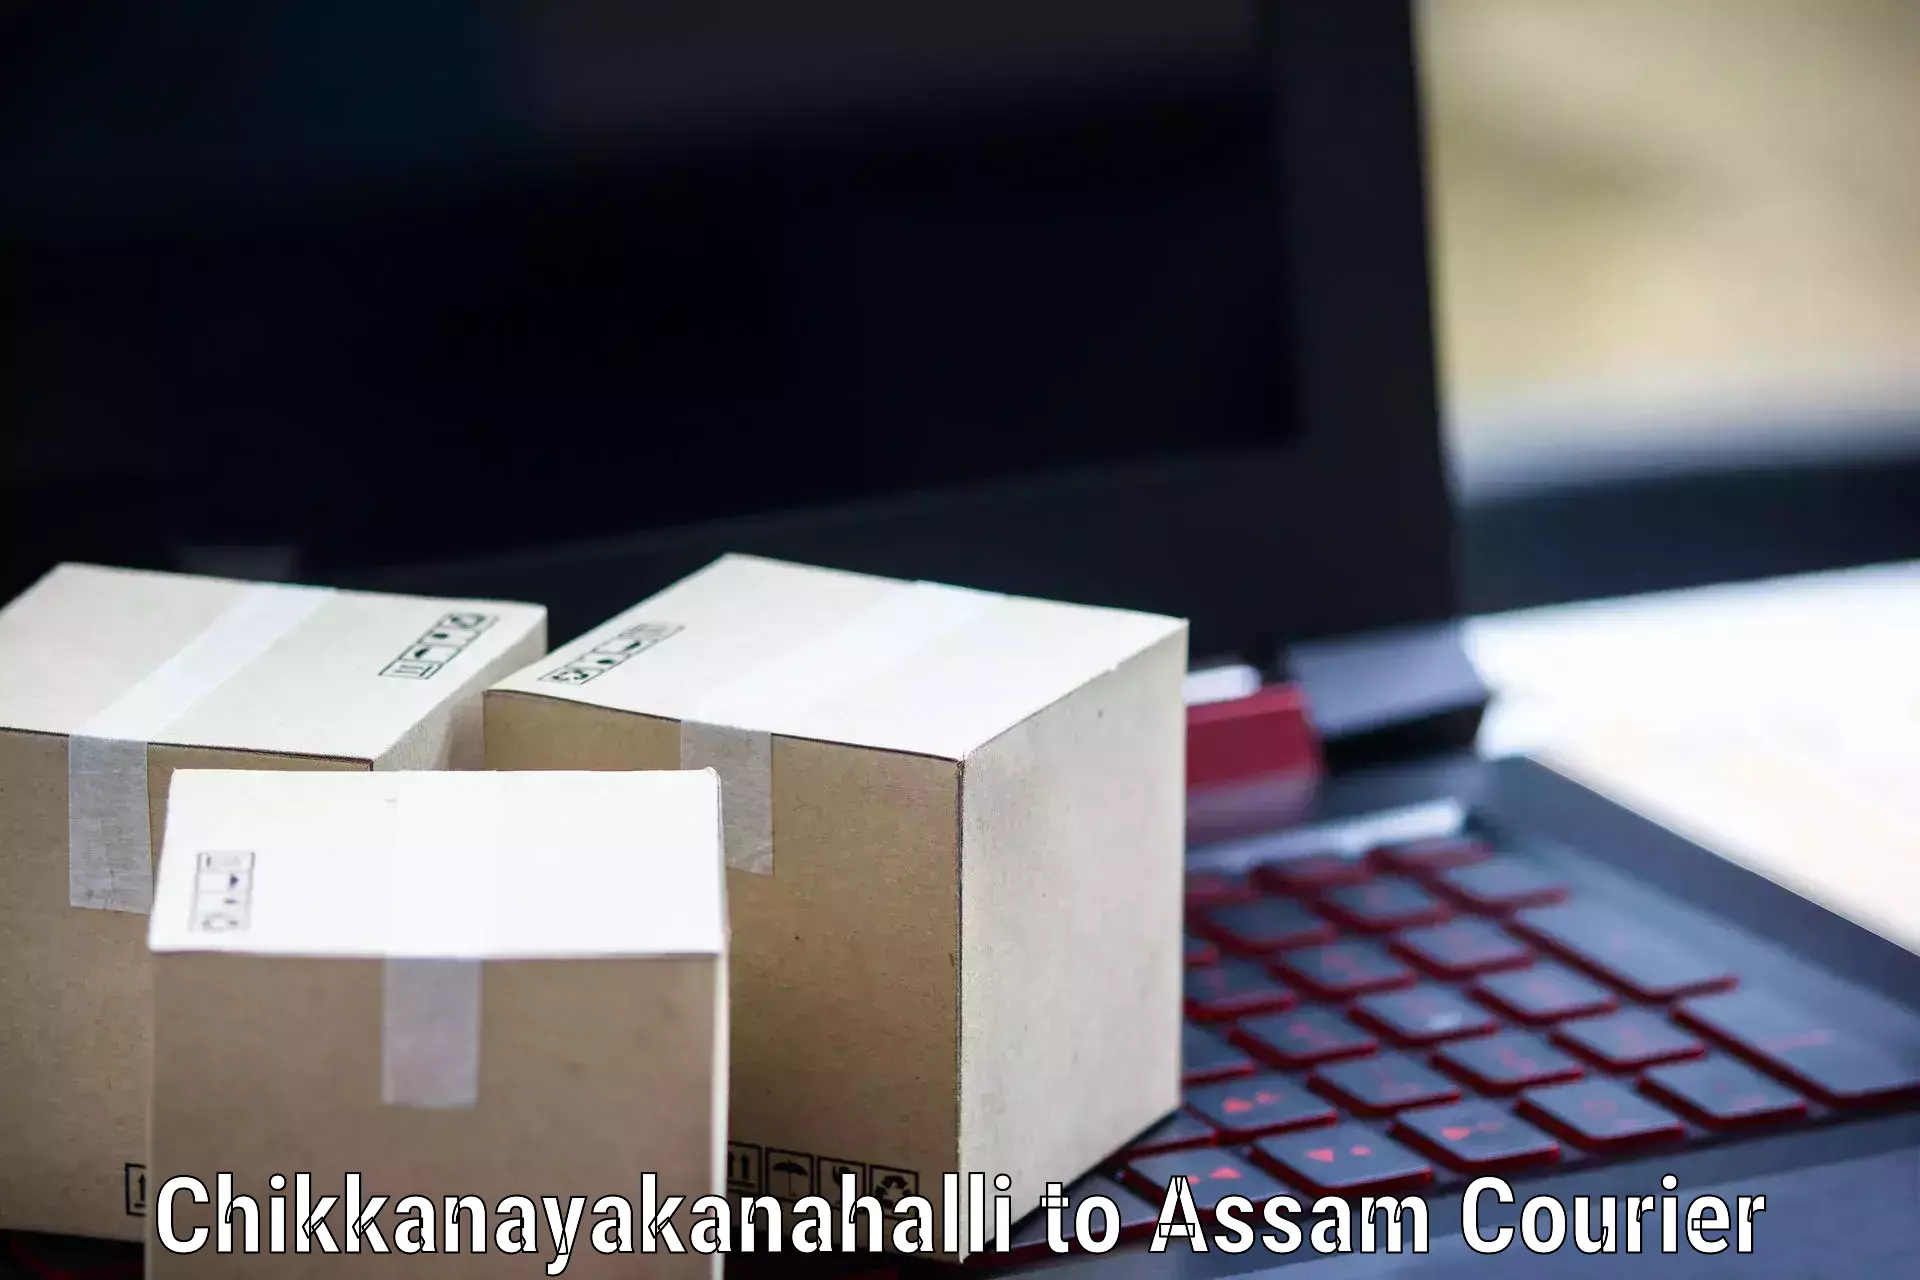 Professional courier services in Chikkanayakanahalli to Behali